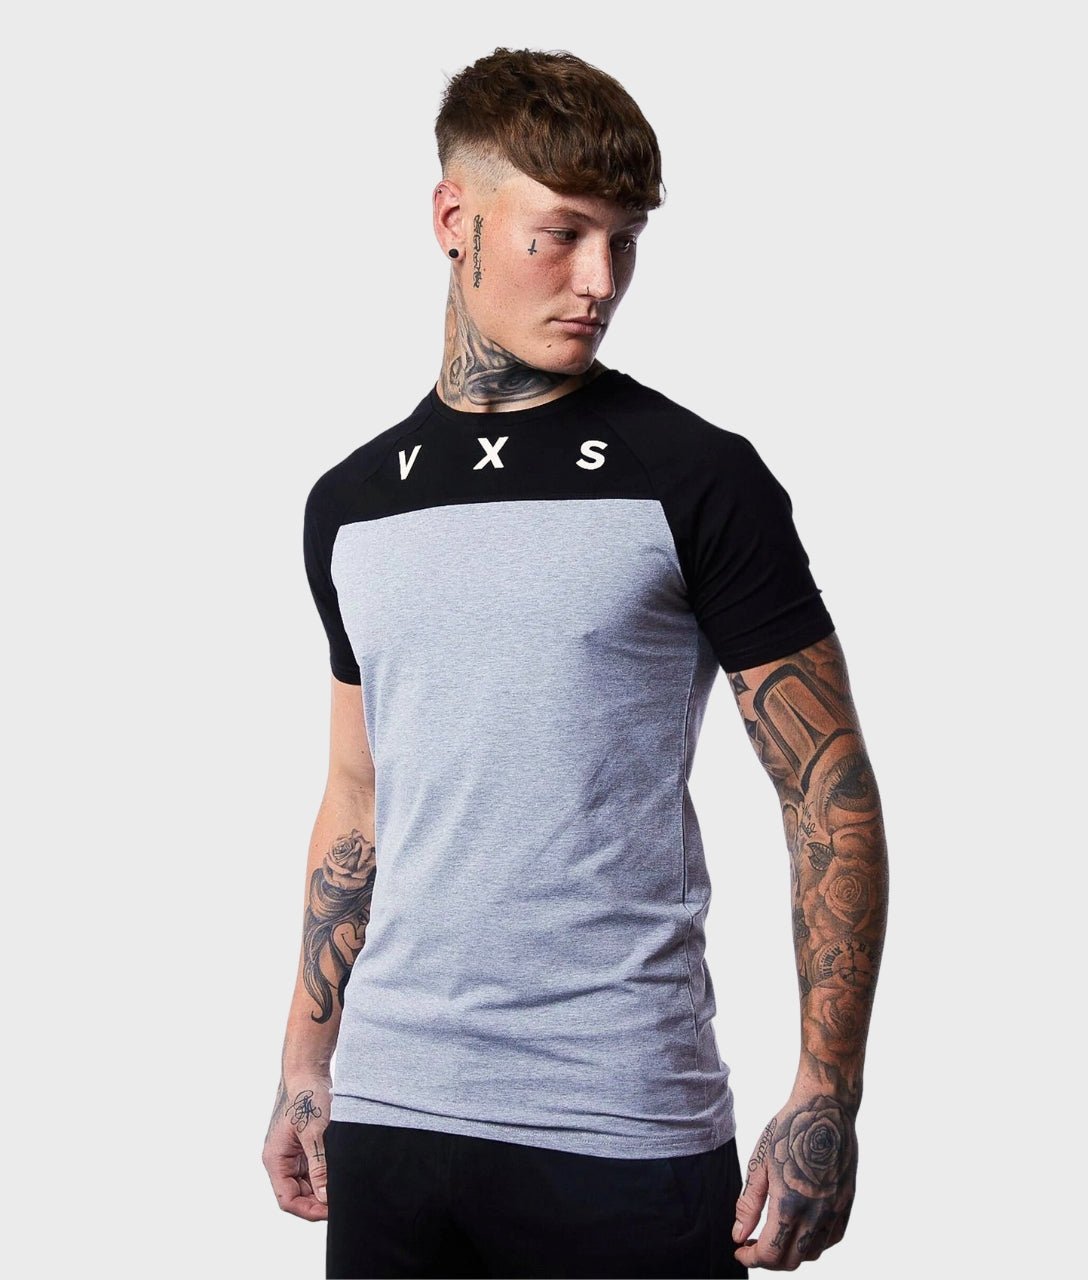 Aces T-Shirt [Black/Grey] - VXS GYM WEAR